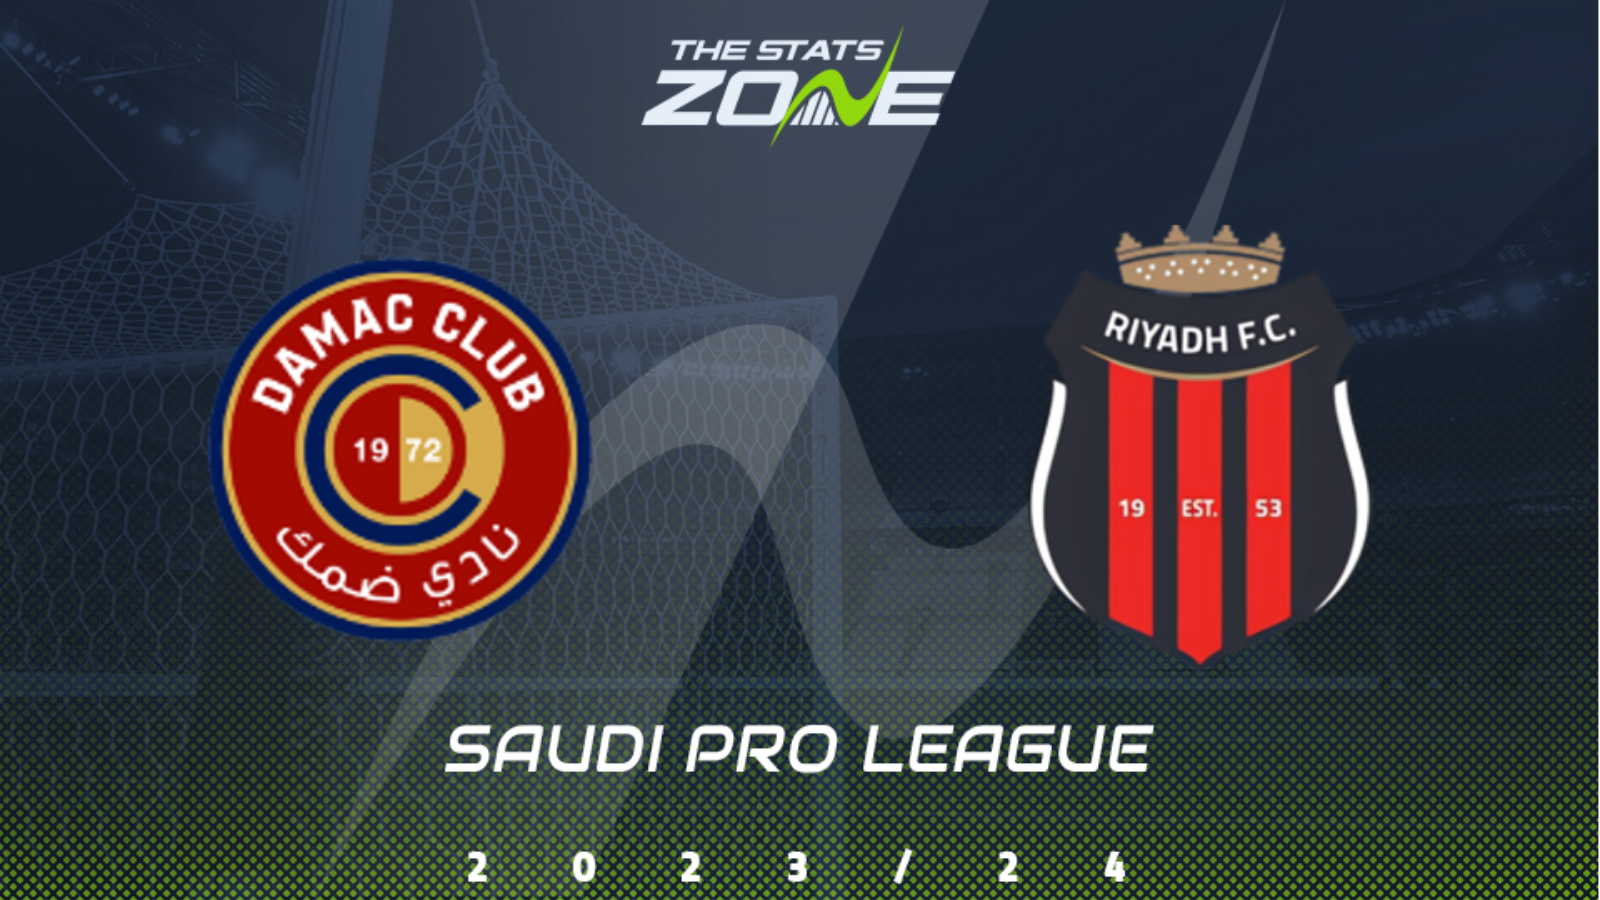 Saudi pro league. Saudi Pro League standings. Roshn Saudi Pro League background. Saudi Pro League logo без фона.